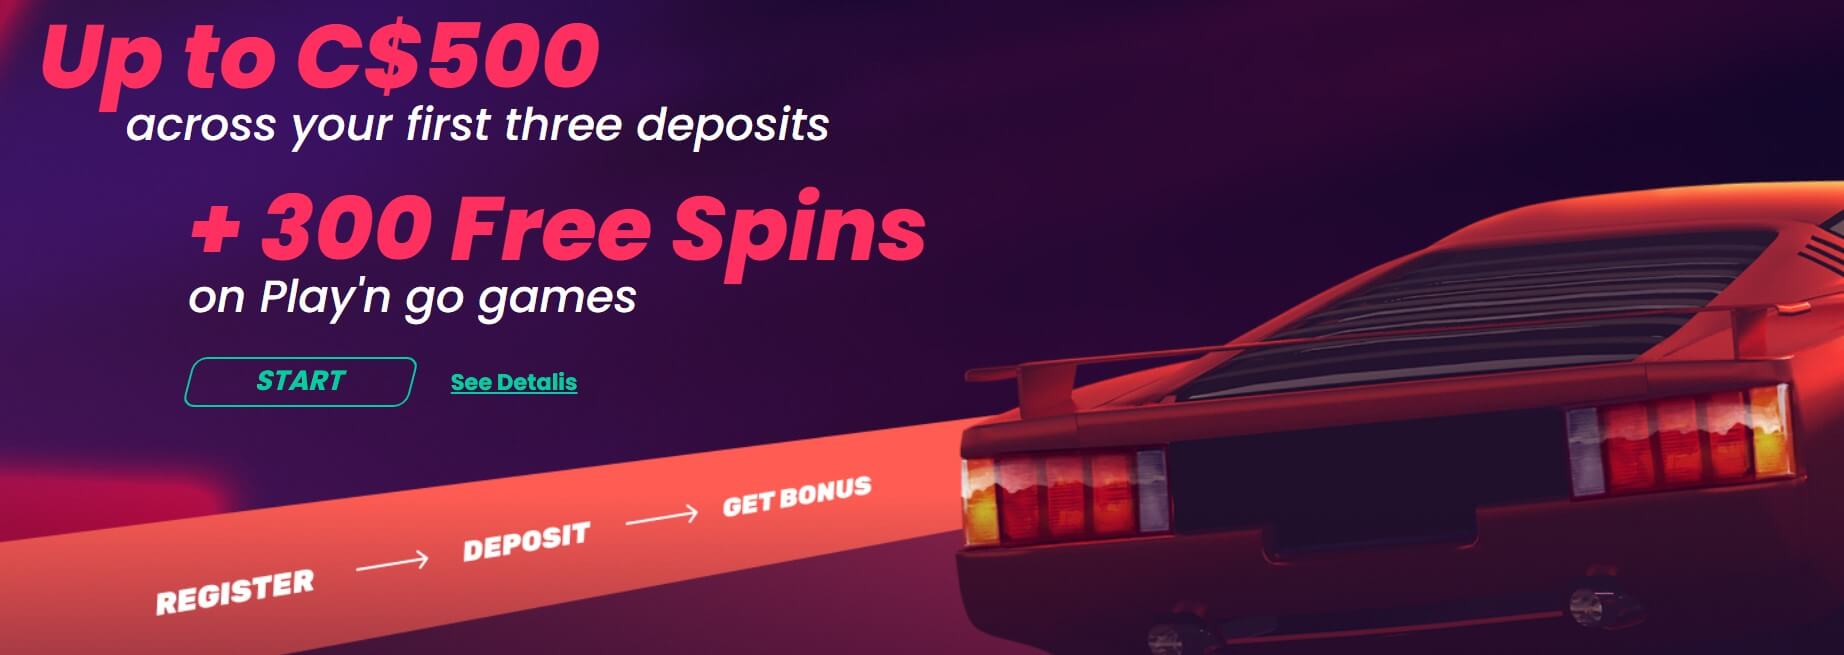 Turbico Casino Free Spins Offer